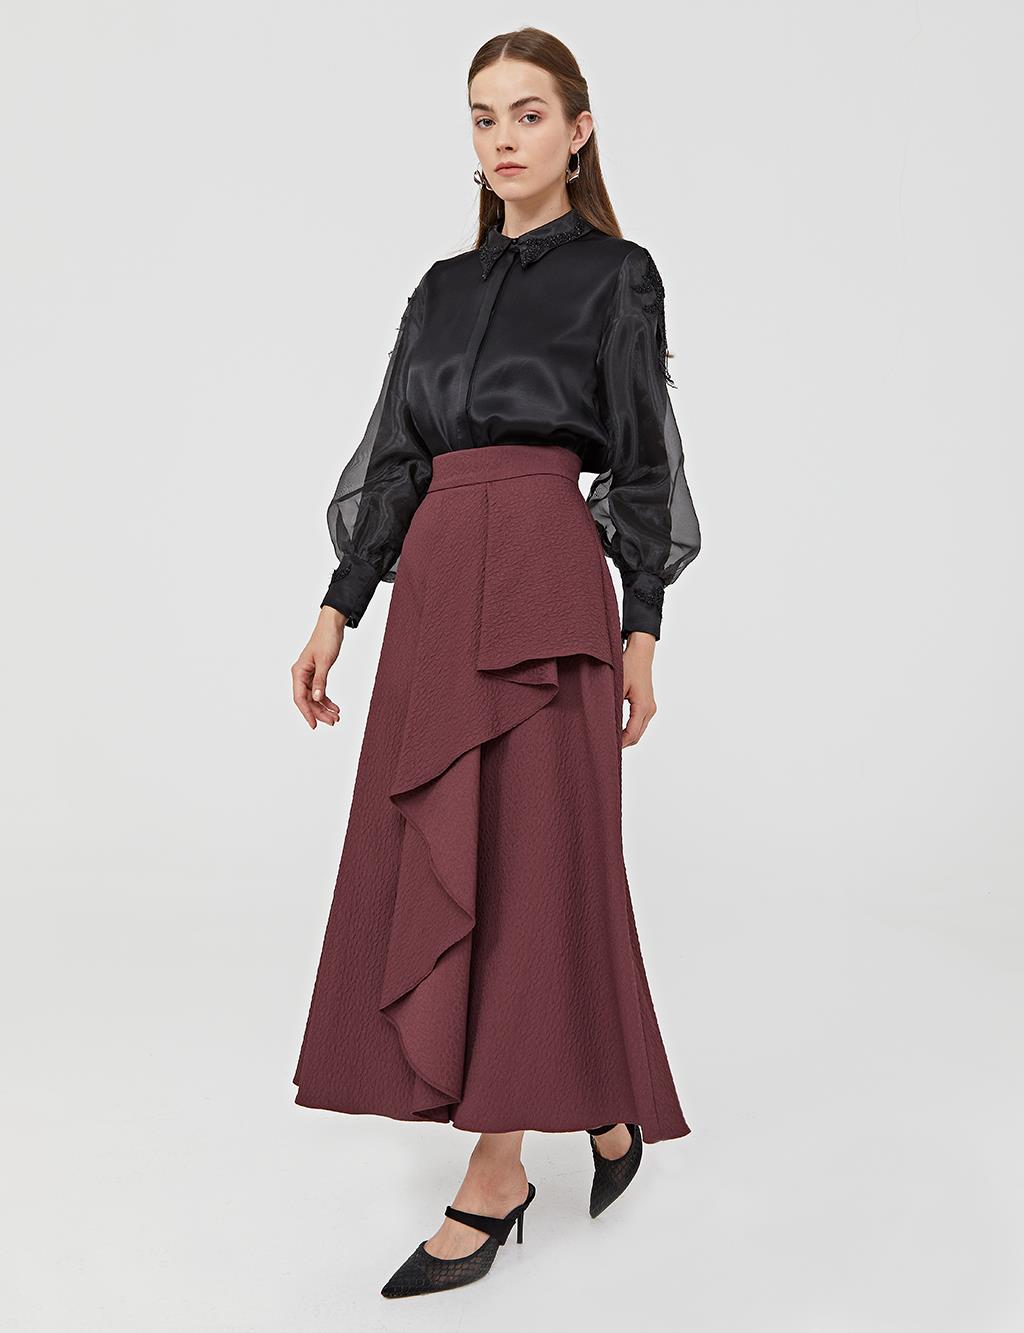 Asymmetrical Cut Skirt A21 12034 Burgundy